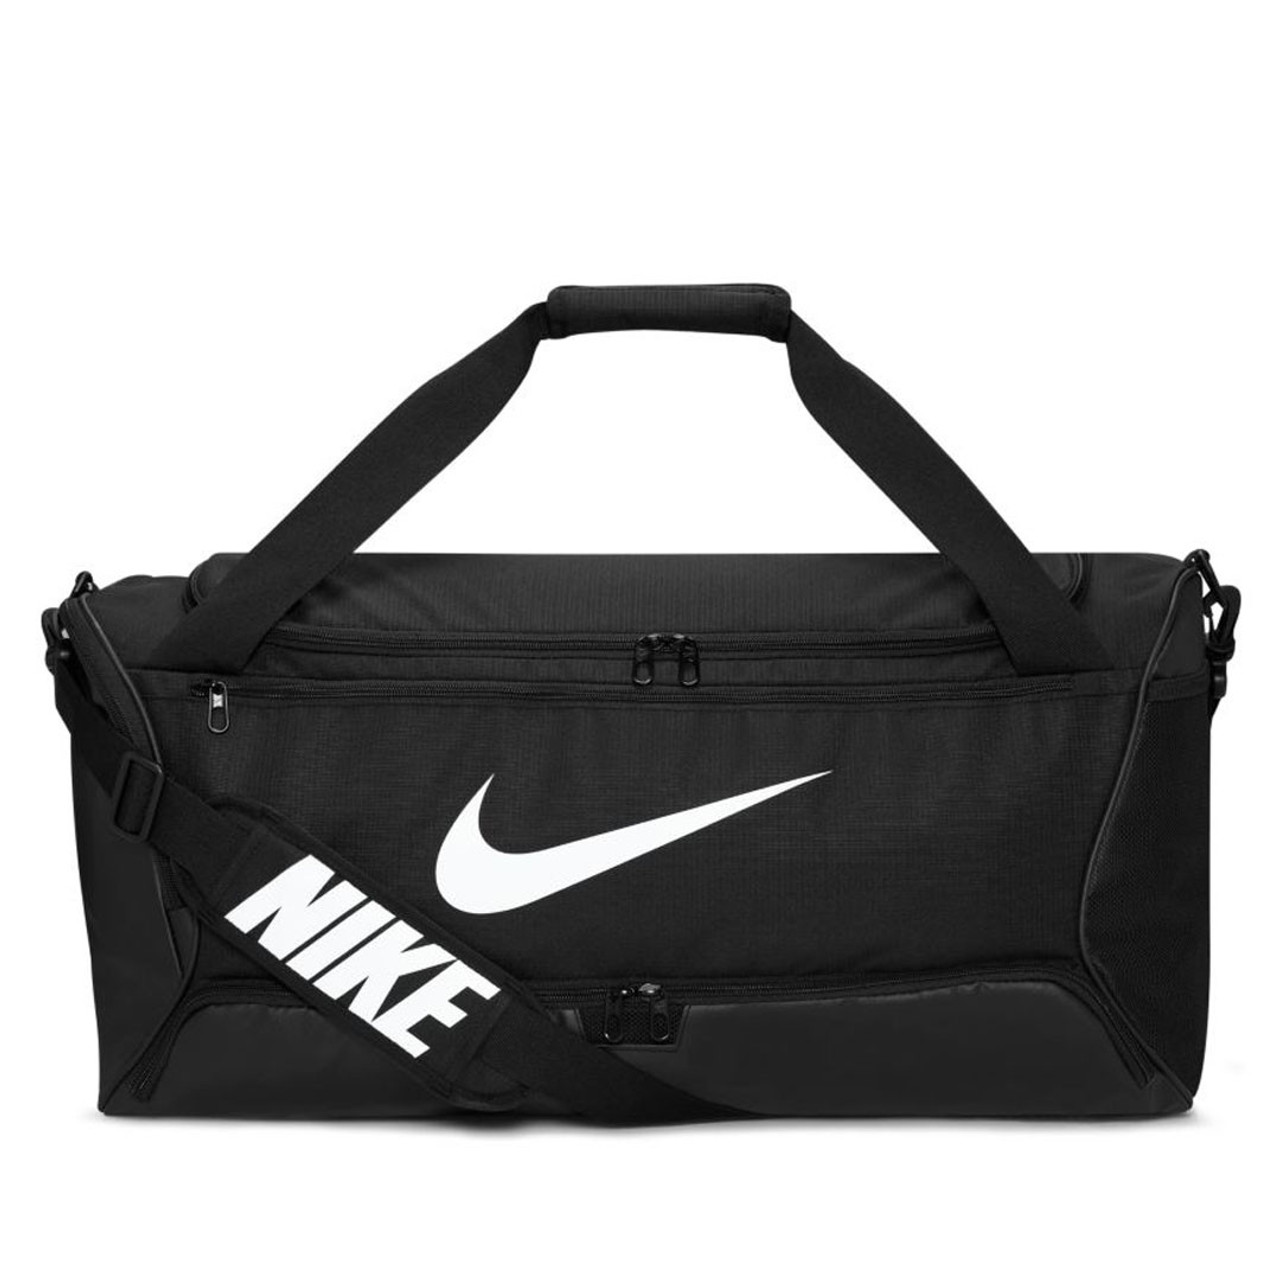 Nike Brasilia 9.5 Training Duffel Bag $ 40